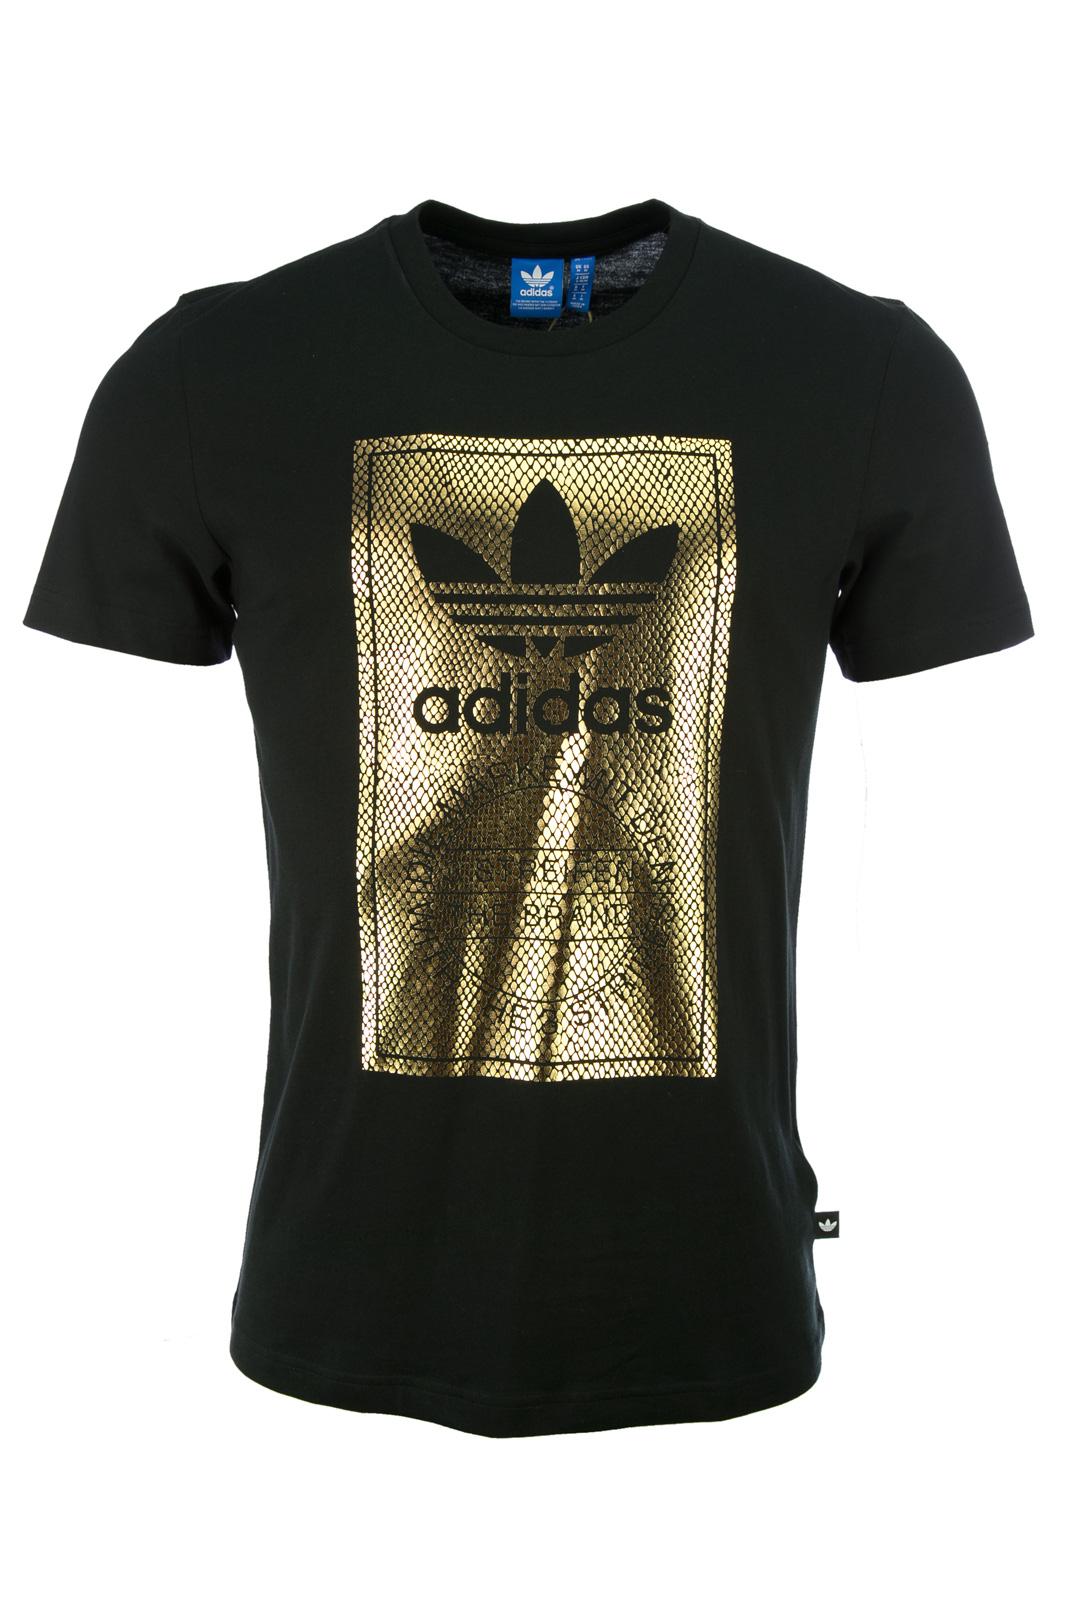 adidas gold logo shirt